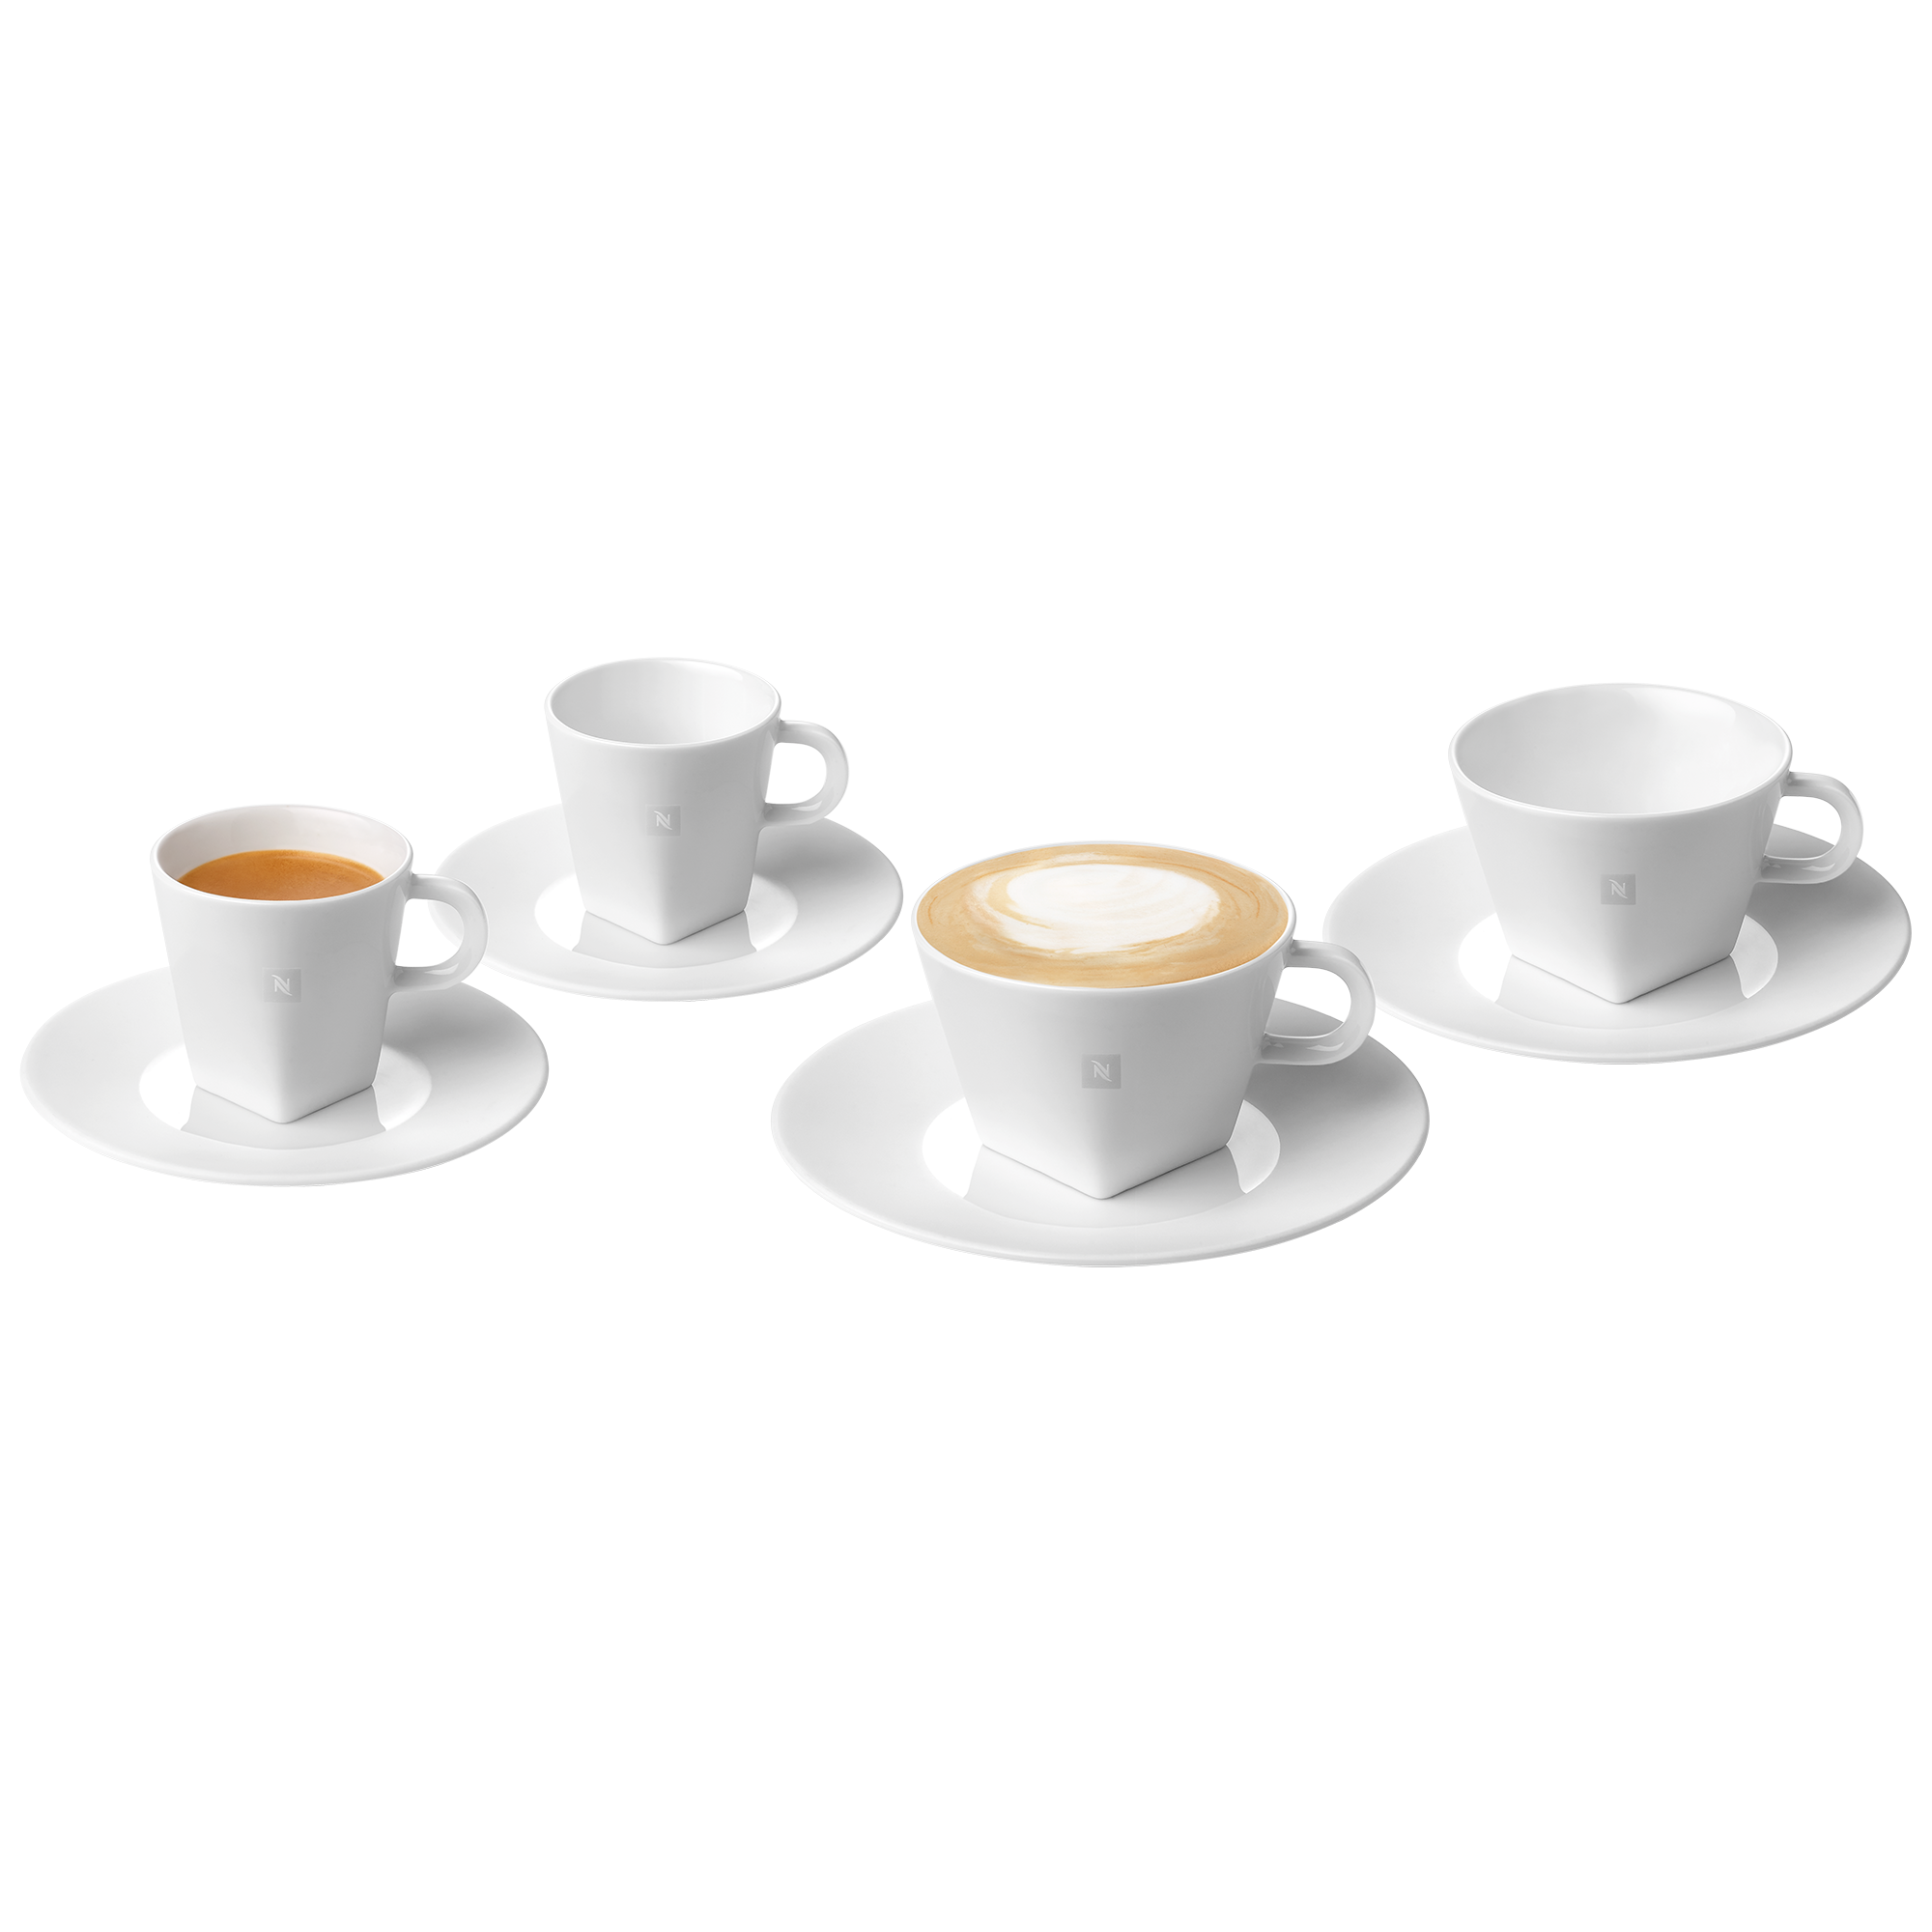 Espresso & Lungo Cups Set, Coffee Cups